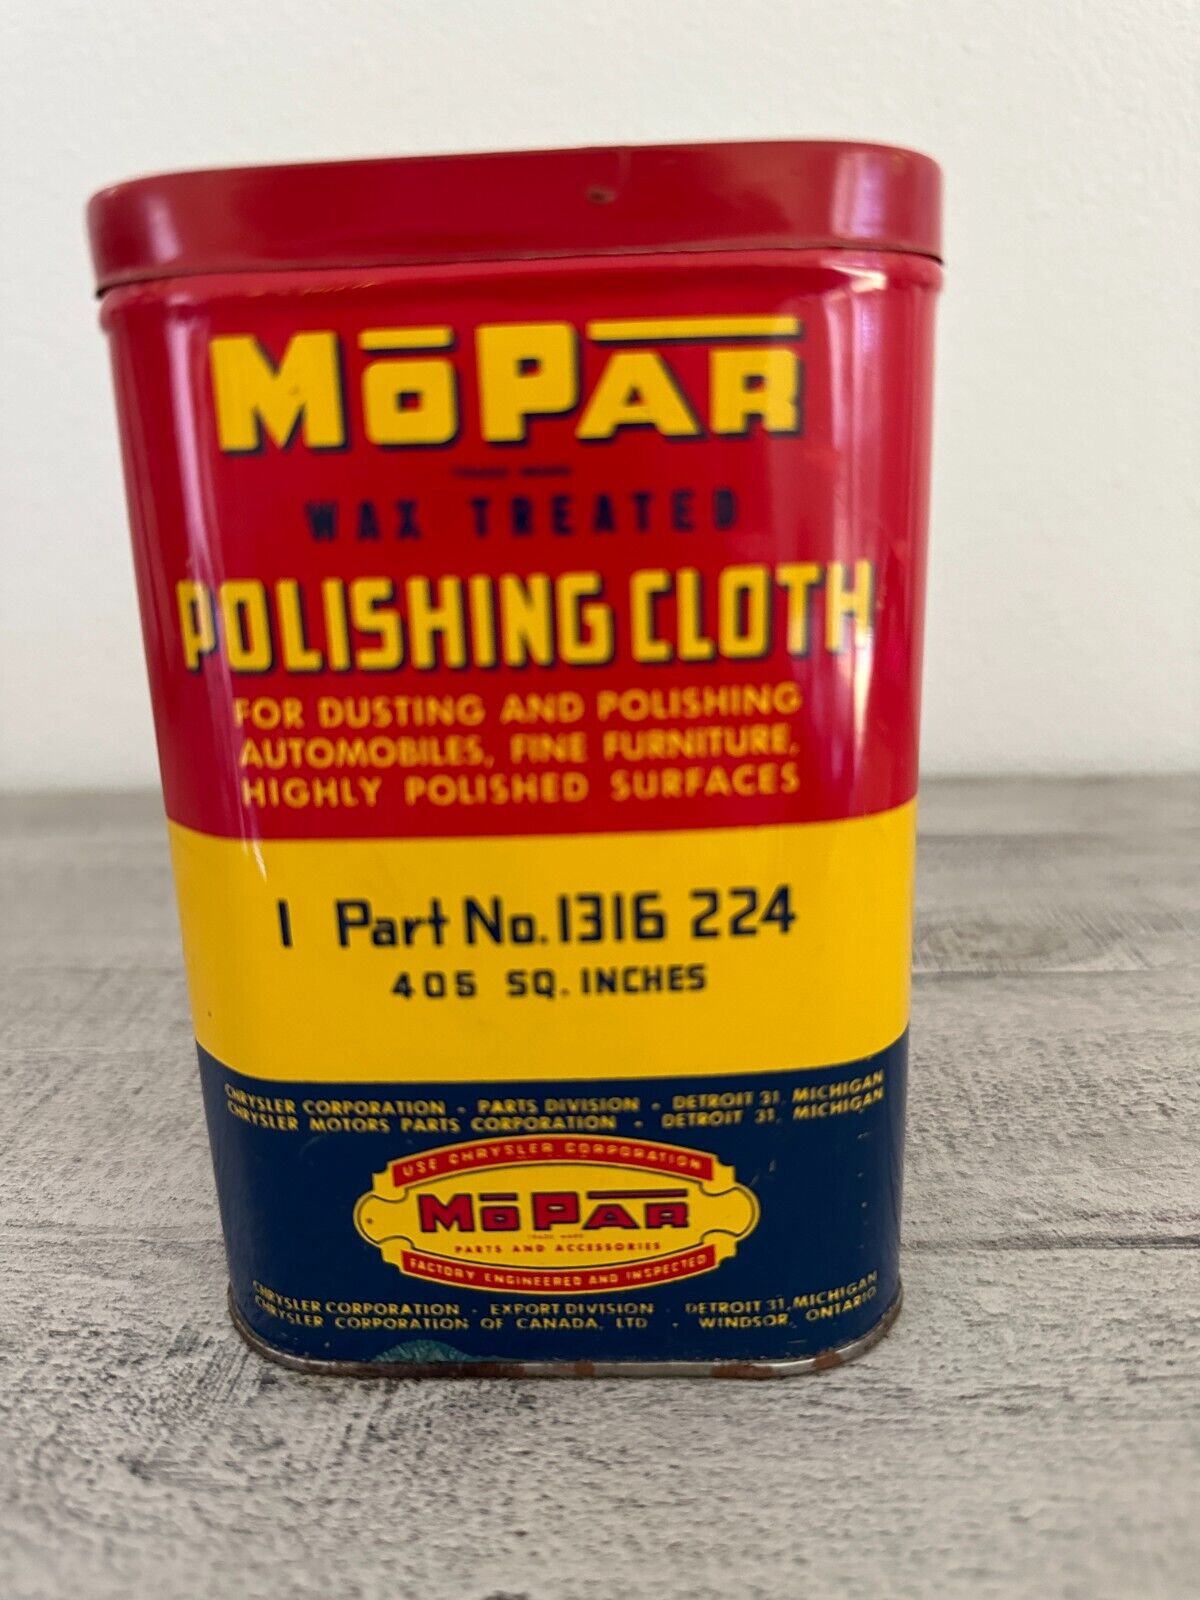 Vintage MoPar Car Polishing Tin Can Part 1316 224